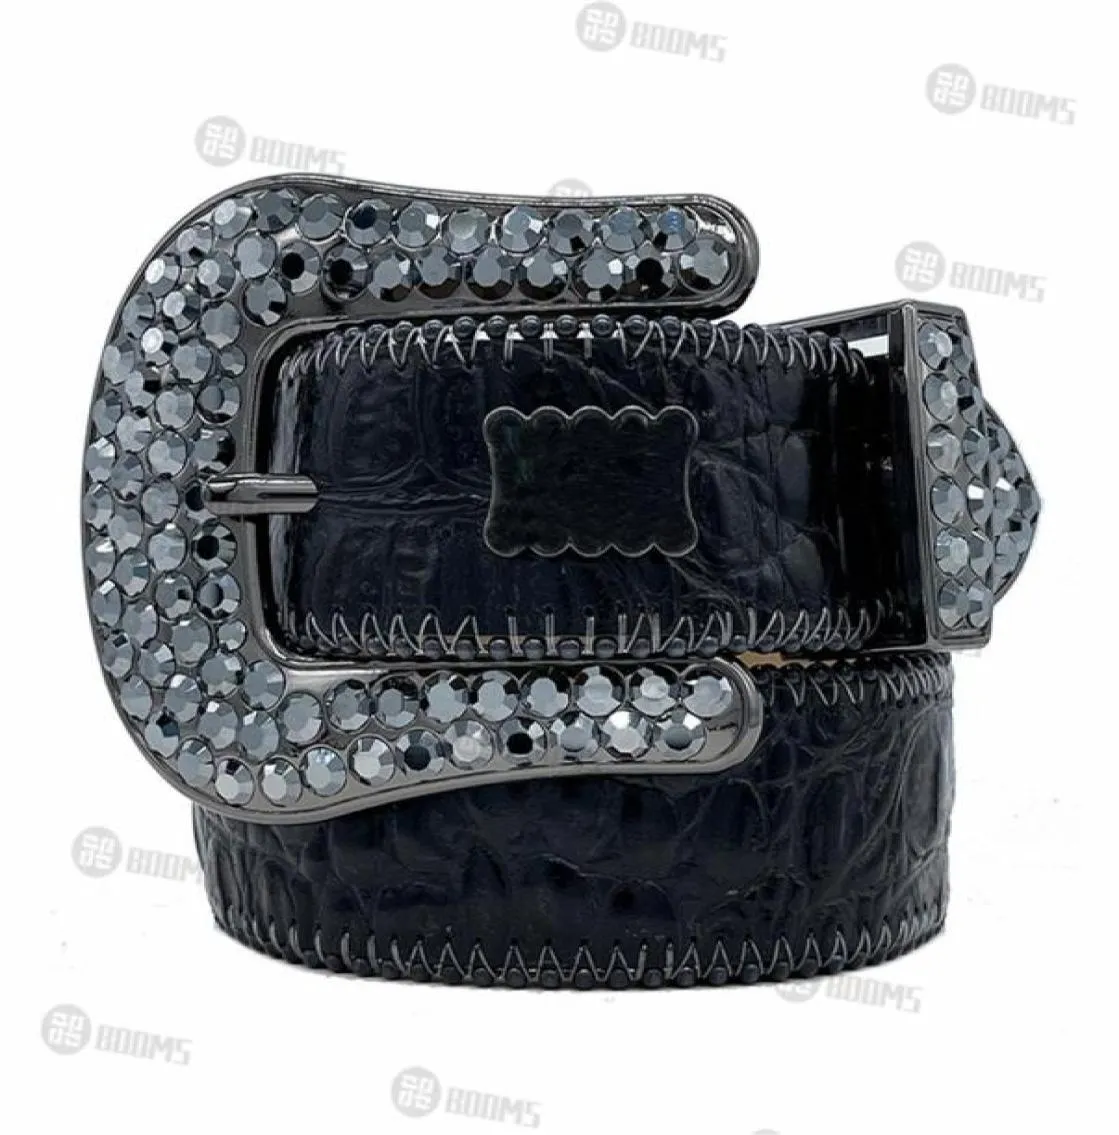 Cintura firmata 2021Simon Cinture per uomo Donna Cintura con diamanti lucidi nera Noir Classic233P7072010